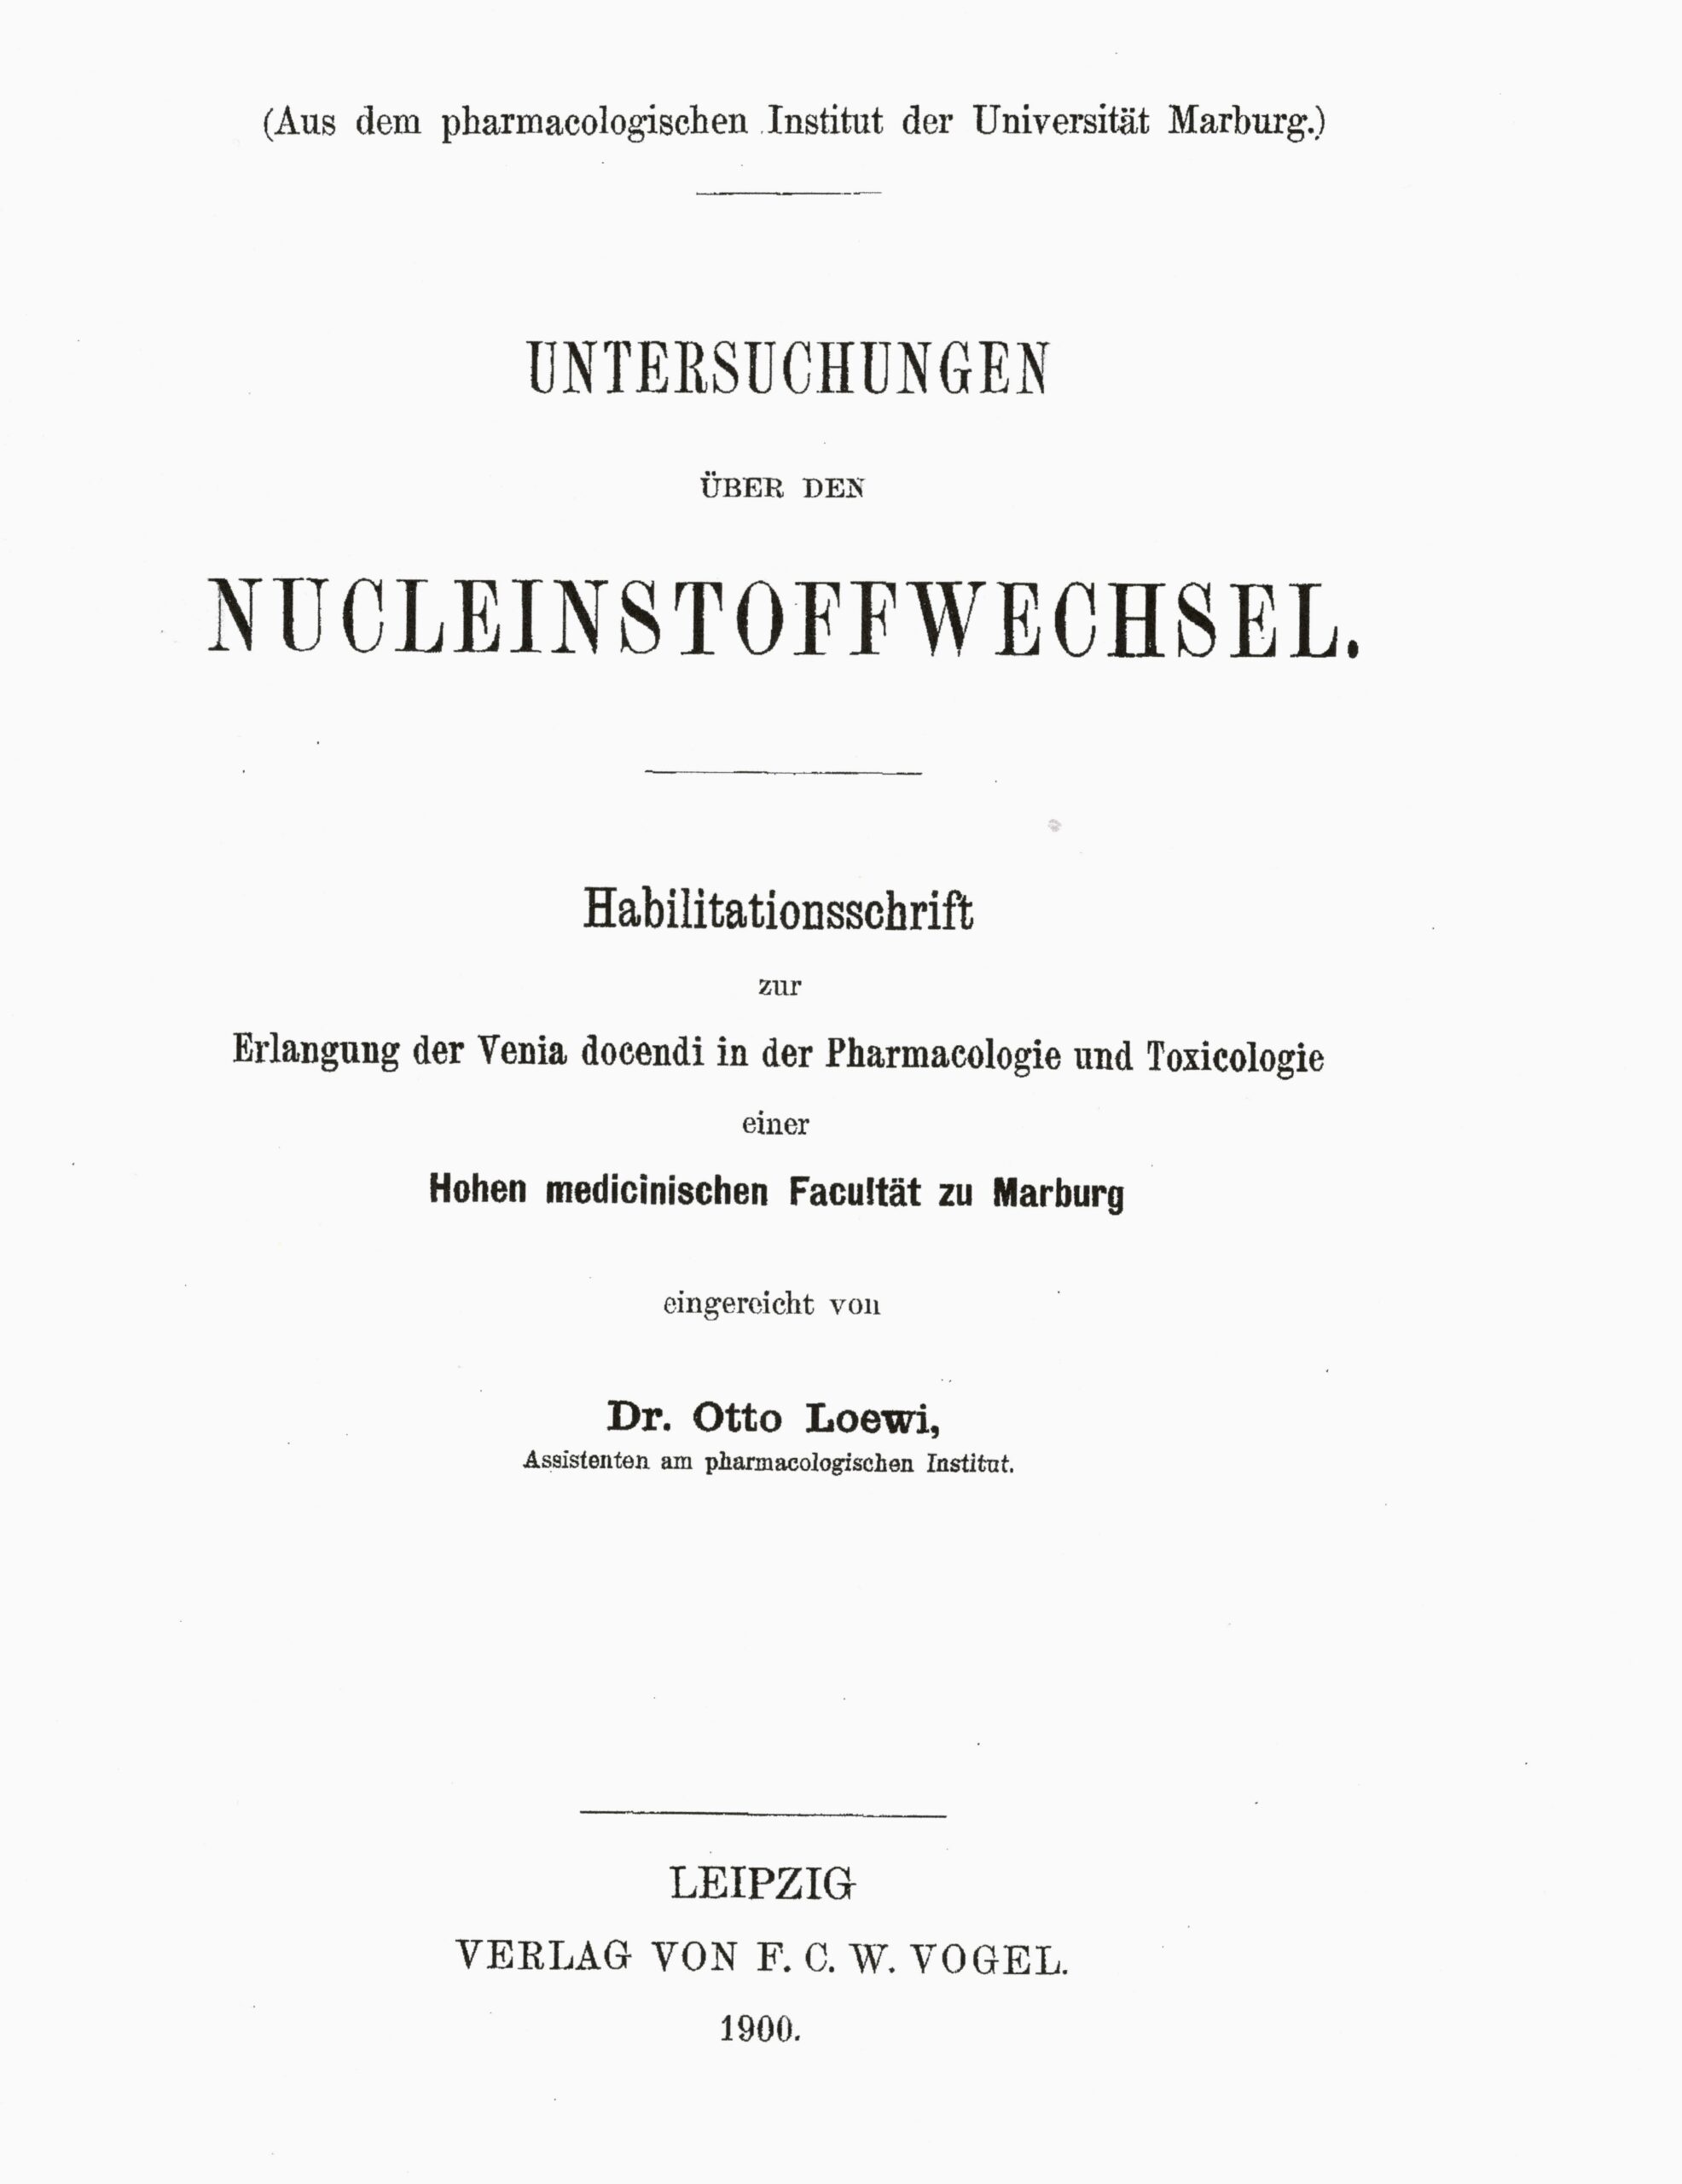 Habilitation thesis, Marburg 1900